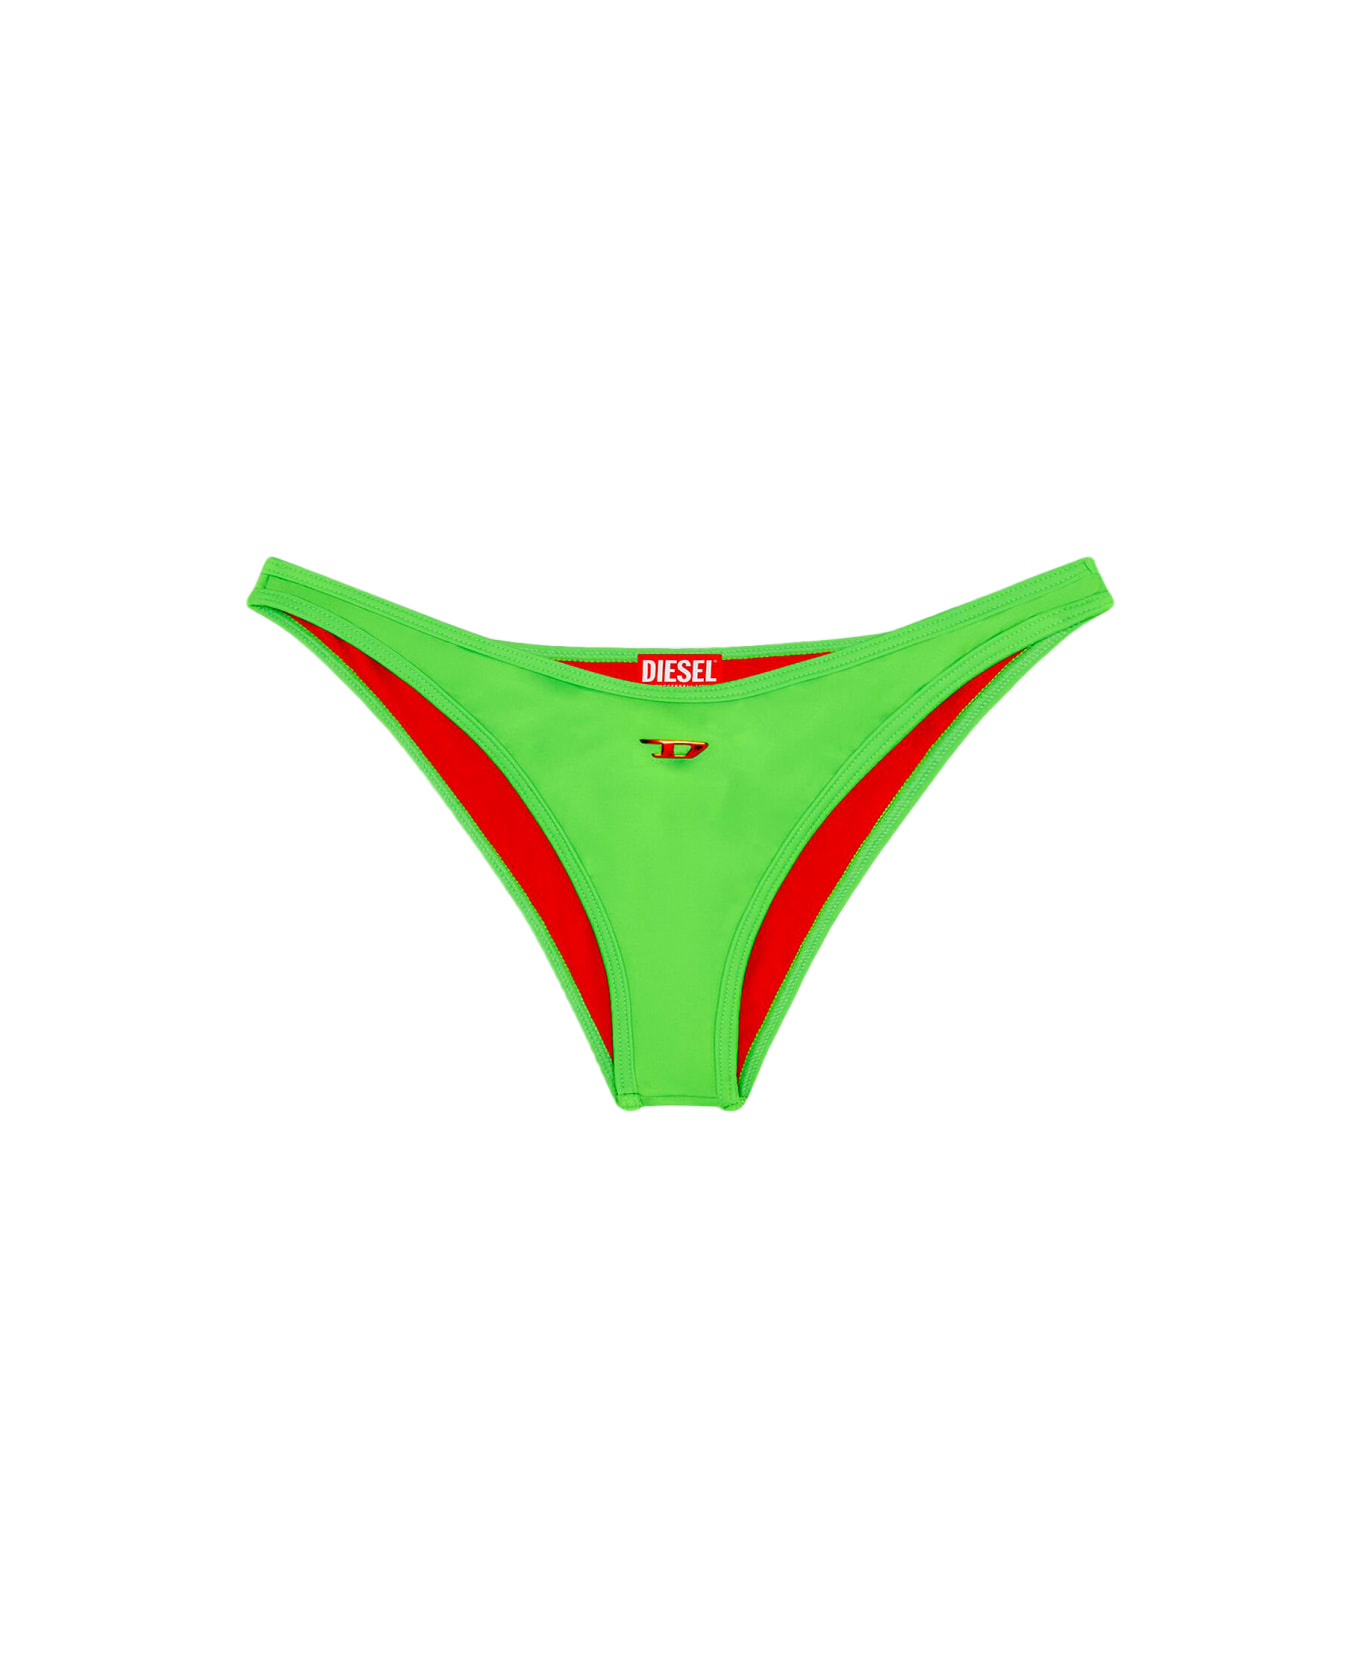 Diesel Bfpn-punchy-x Neon green lycra swim panties with Oval D logo - Bfpn Punchy  X - Verde fluo